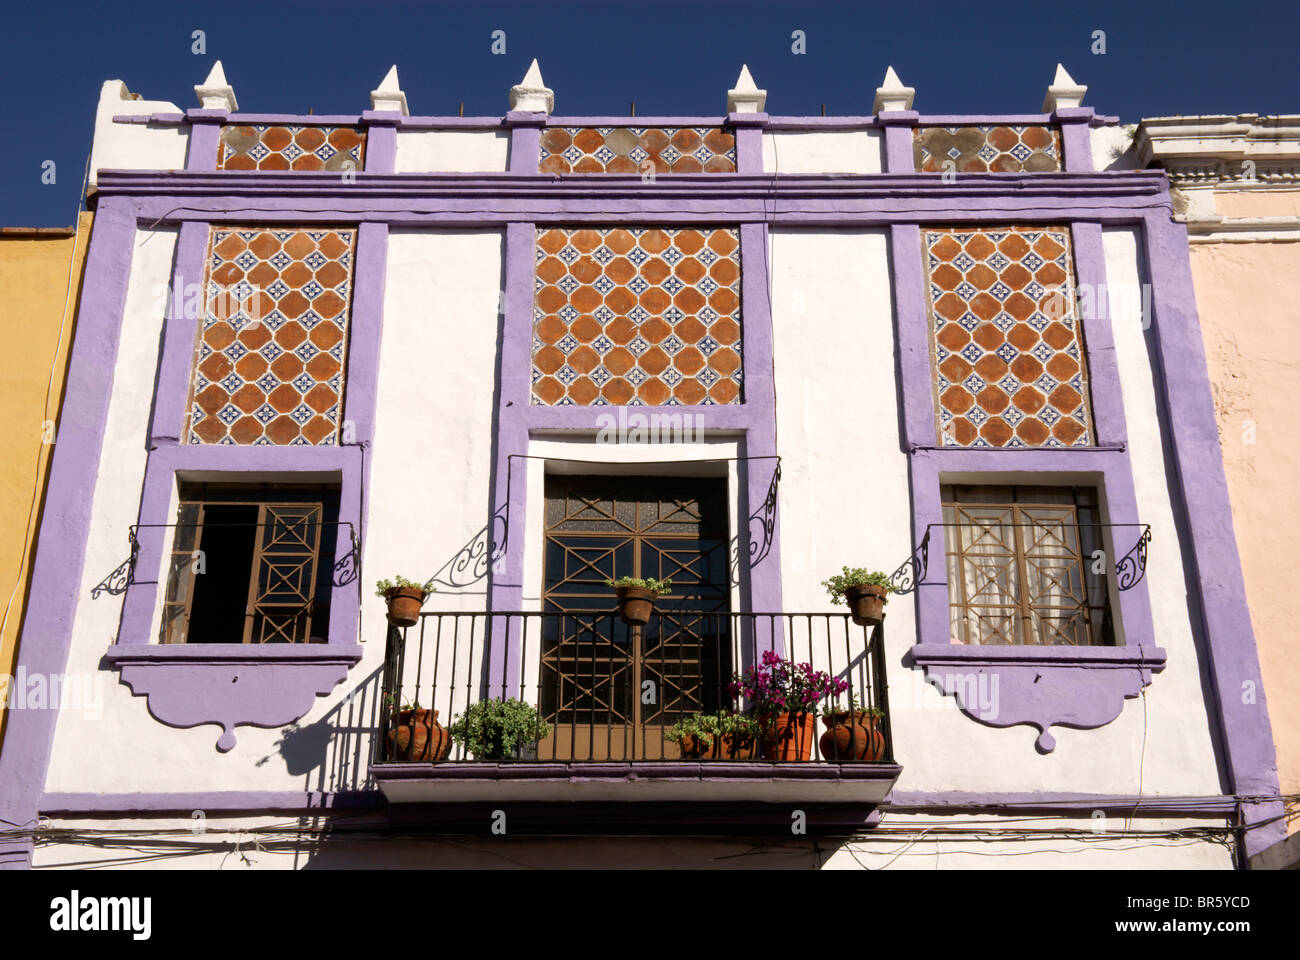 Talavera tiled facade of a house in Puebla, Mexico. The historical center of Puebla is a UNESCO World Heritage Site. Stock Photo